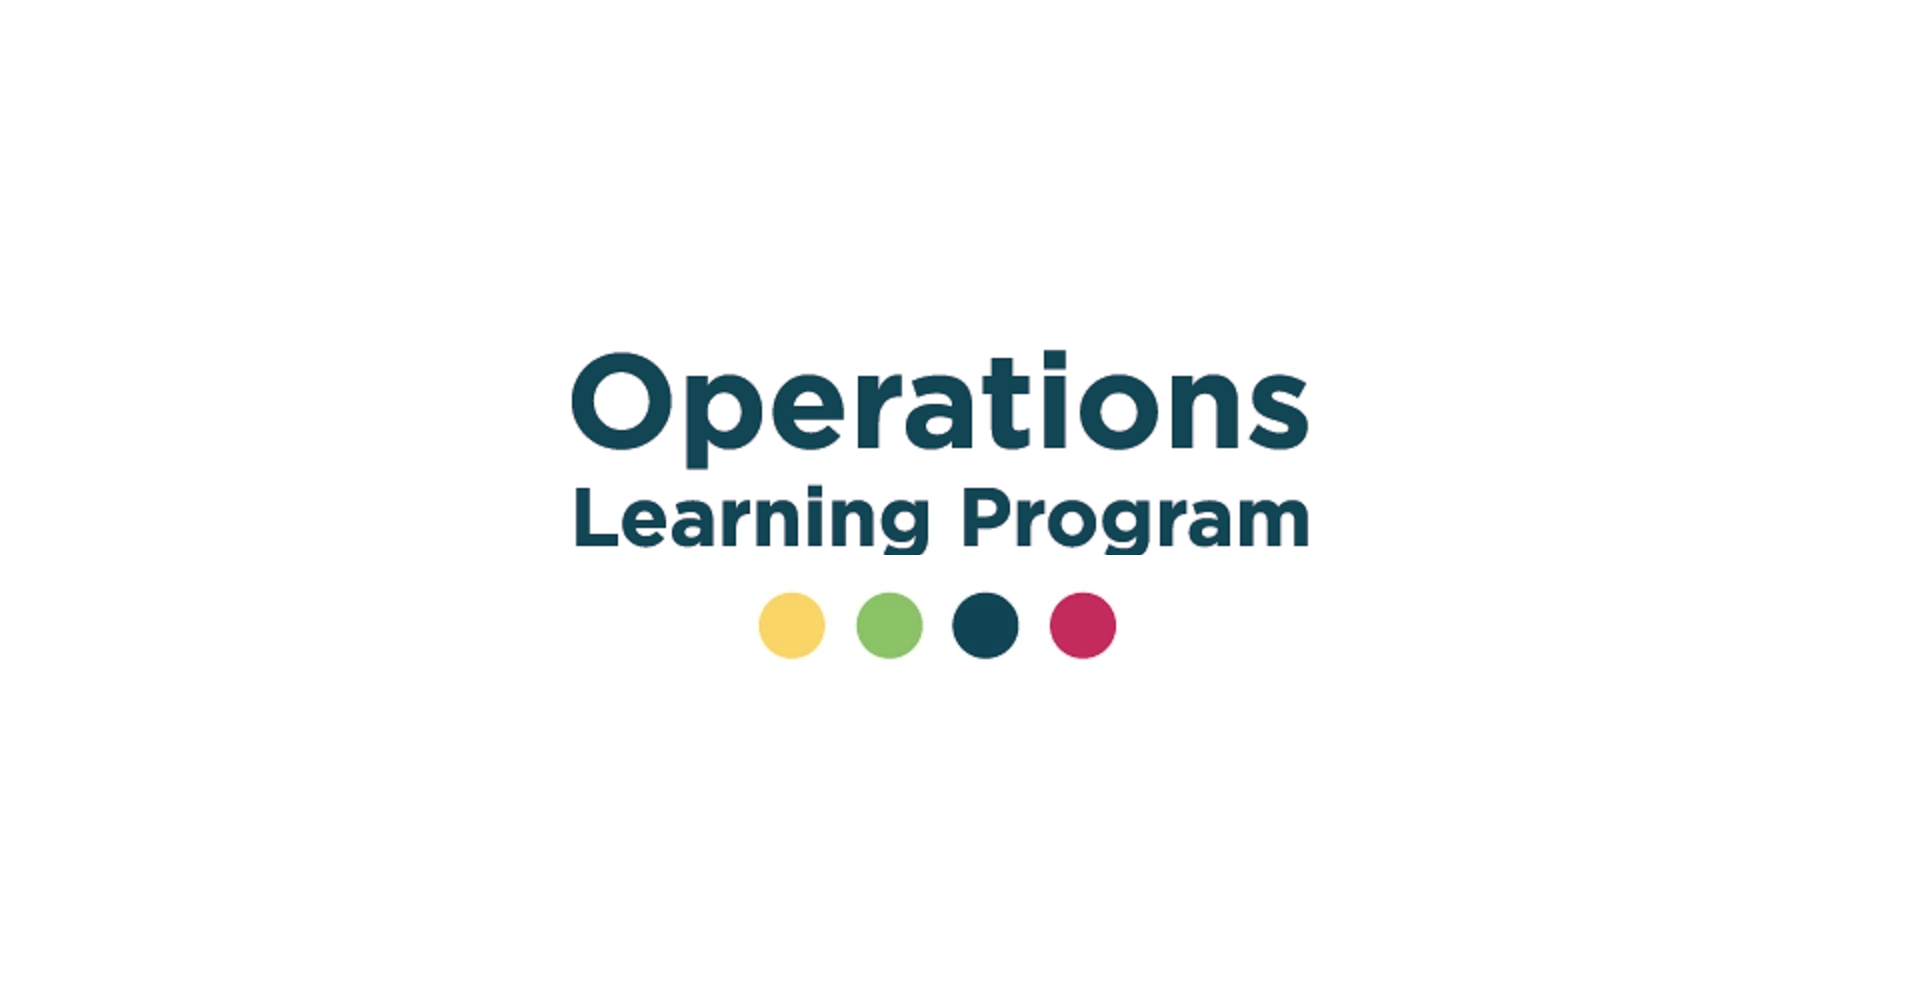 Operations Learning Program